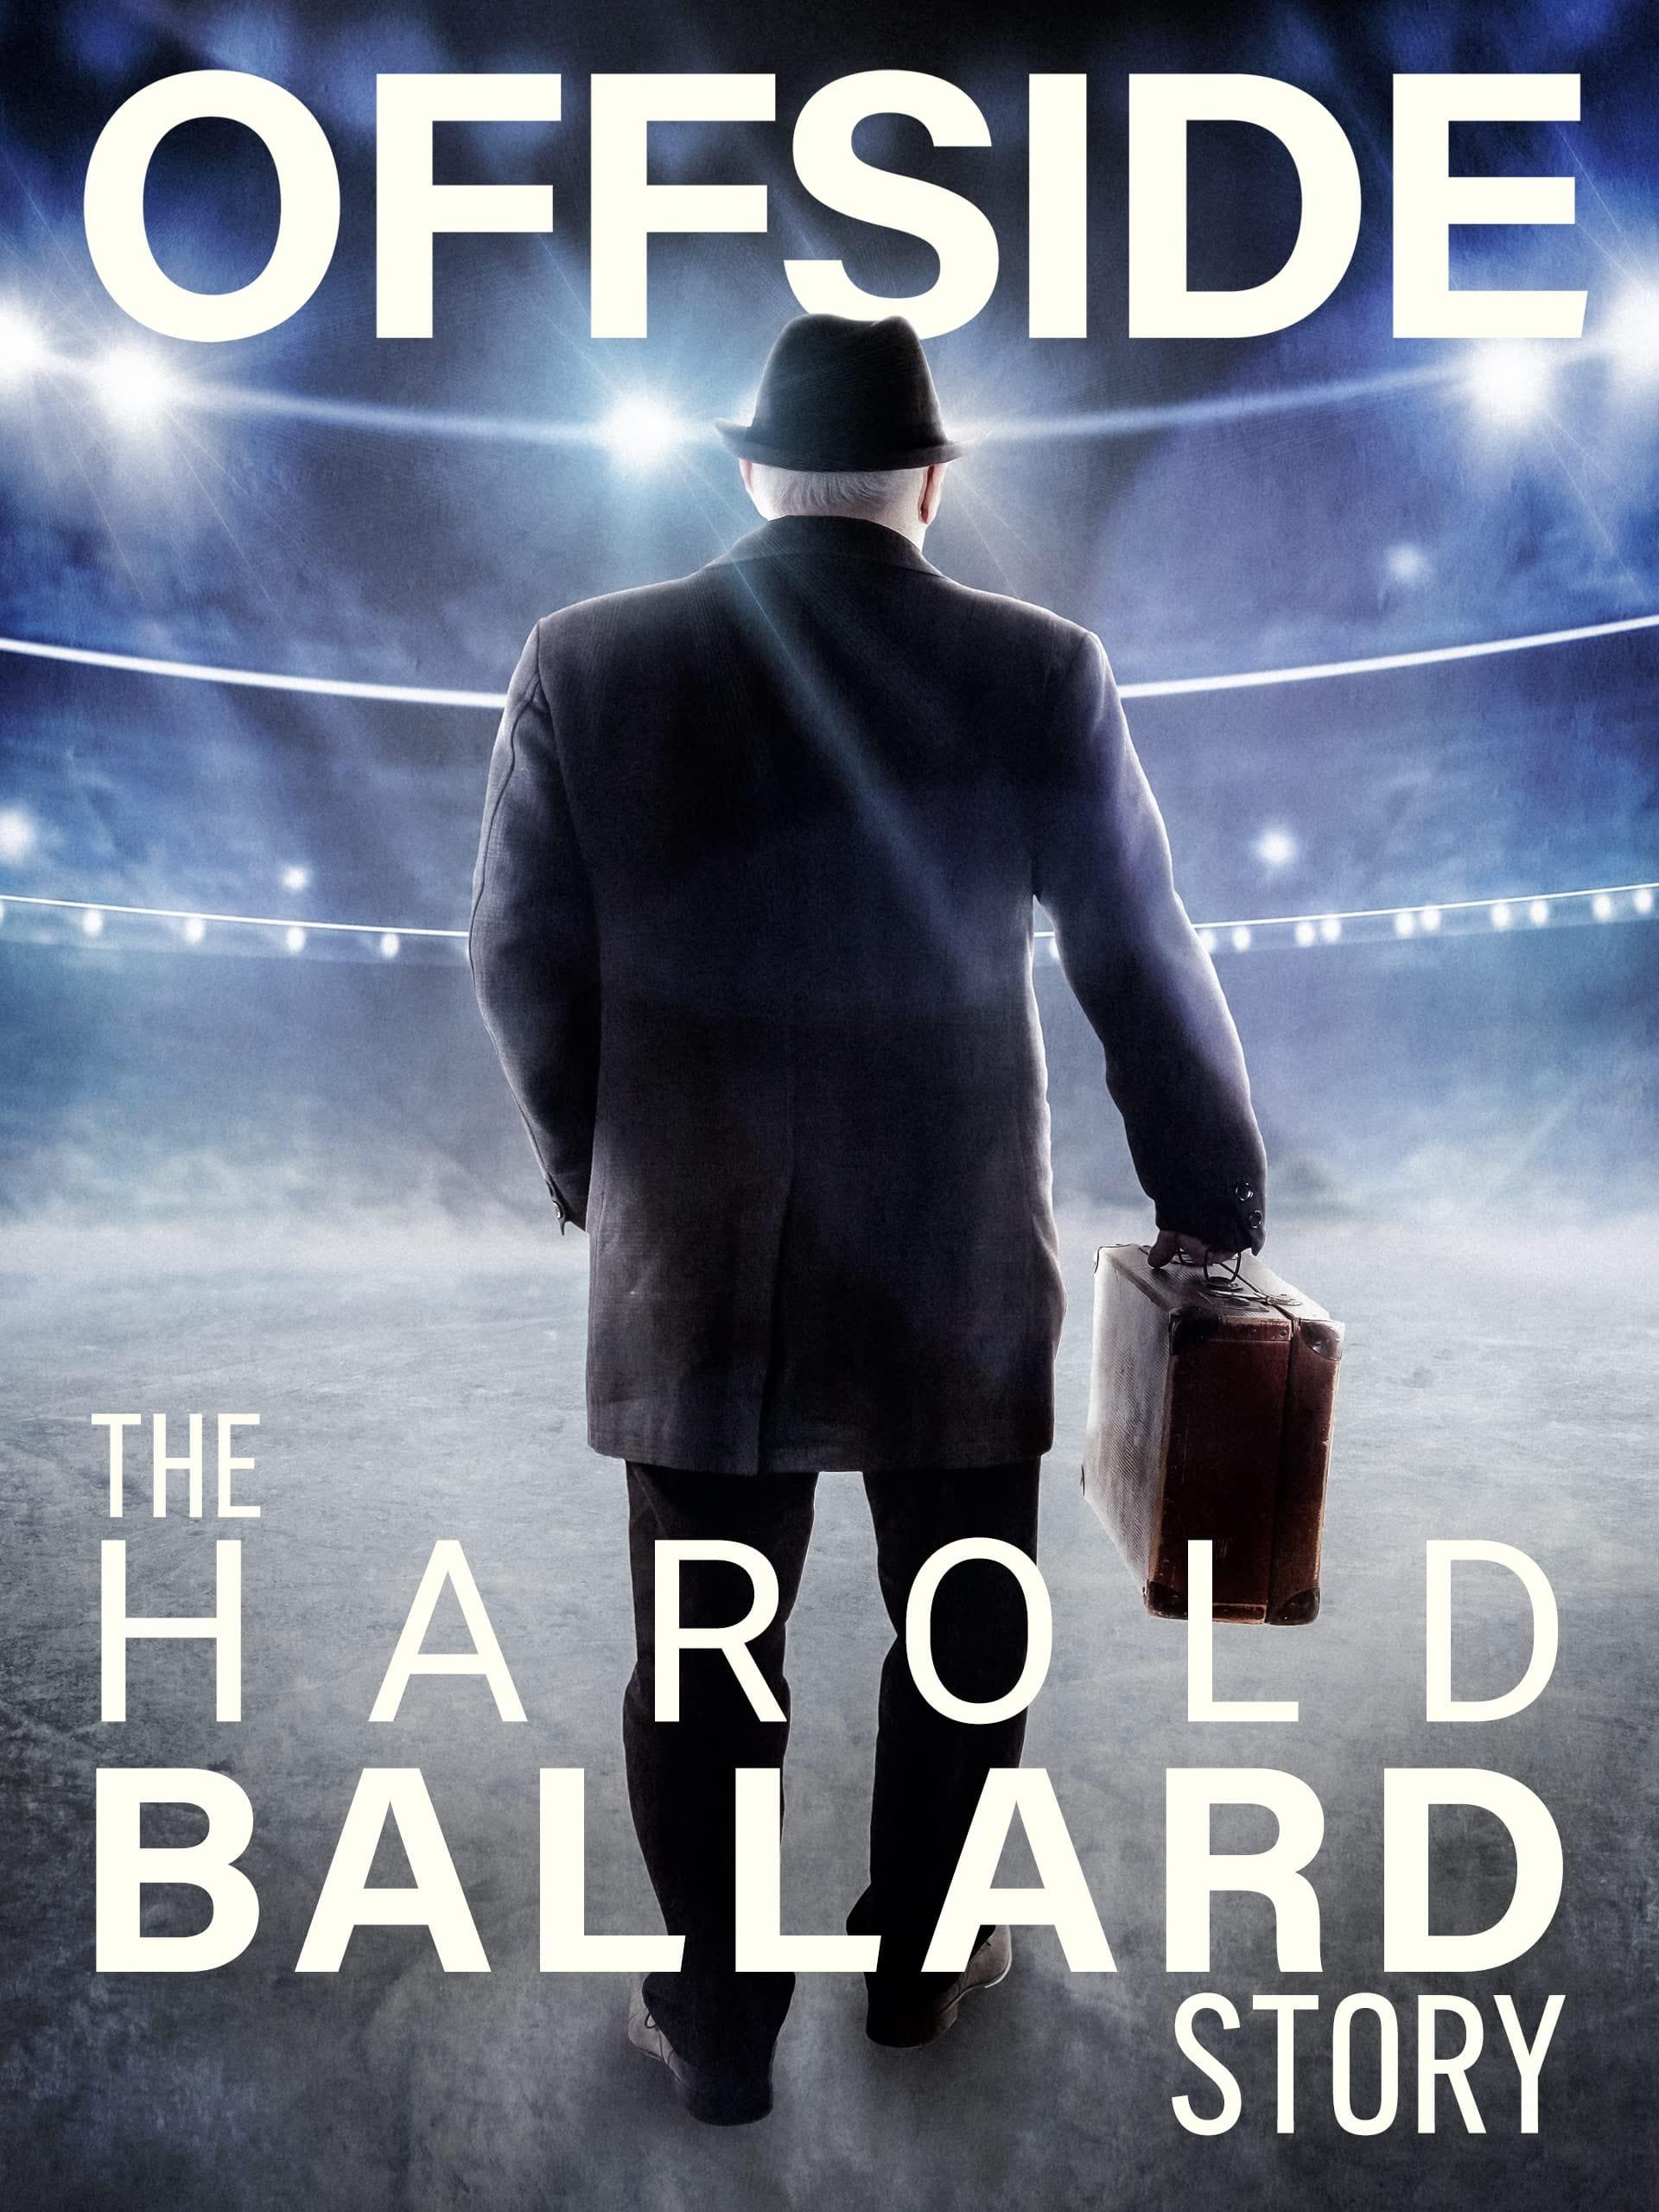 Offside: The Harold Ballard Story poster